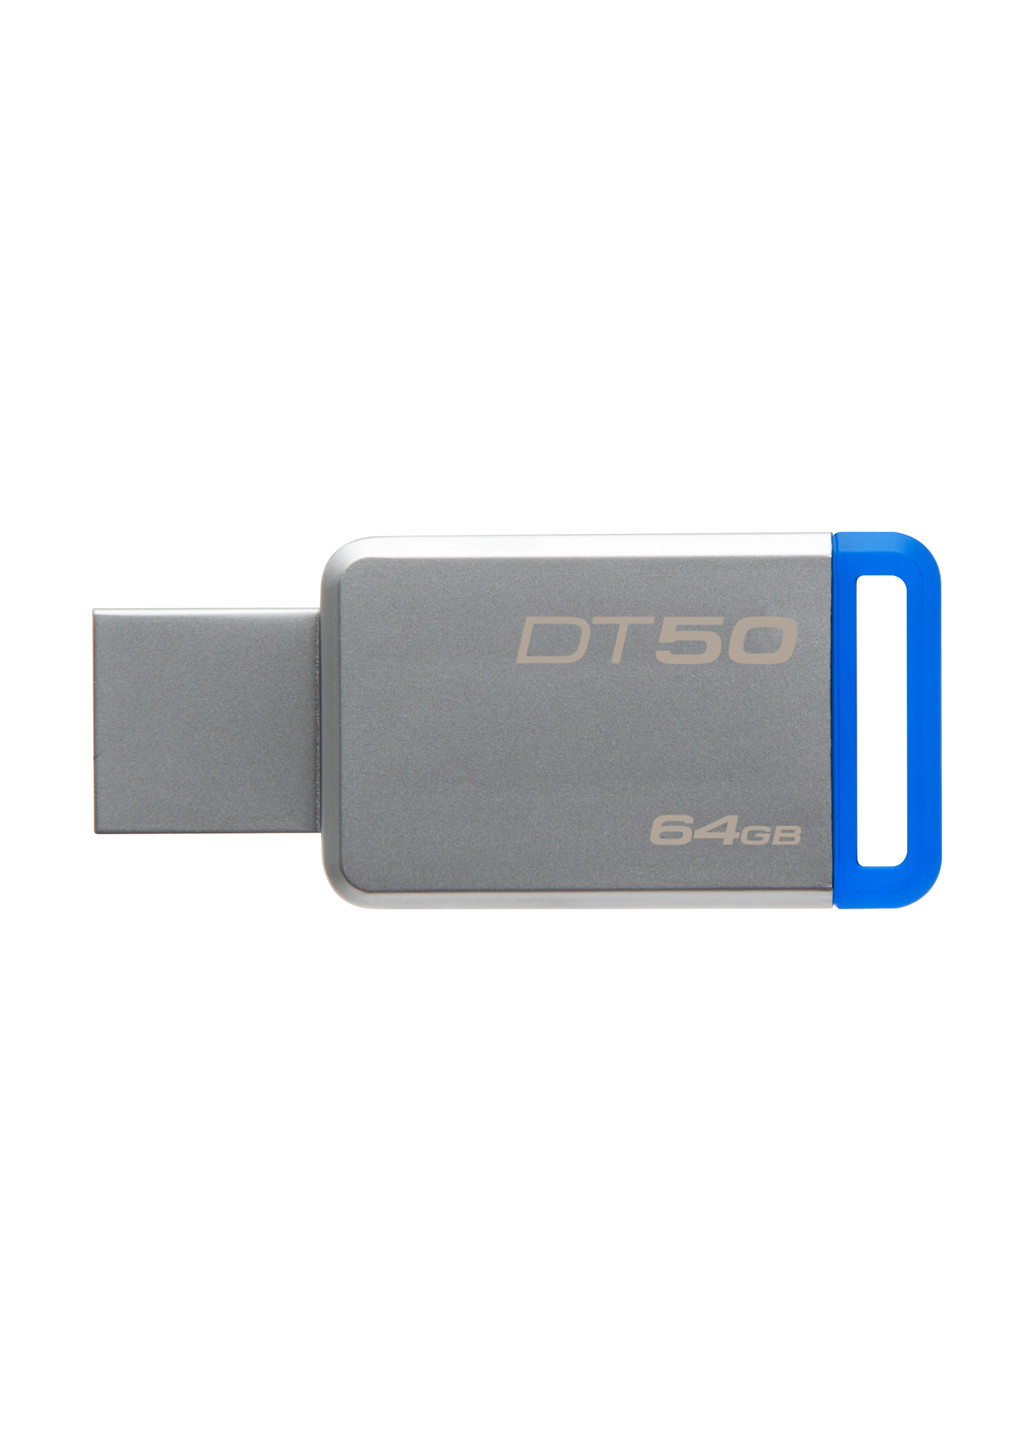 Флеш пам'ять USB DataTraveler 50 64GB Blue (DT50 / 64GB) Kingston Флеш память USB Kingston DataTraveler 50 64GB Blue (DT50/64GB) сріблясті